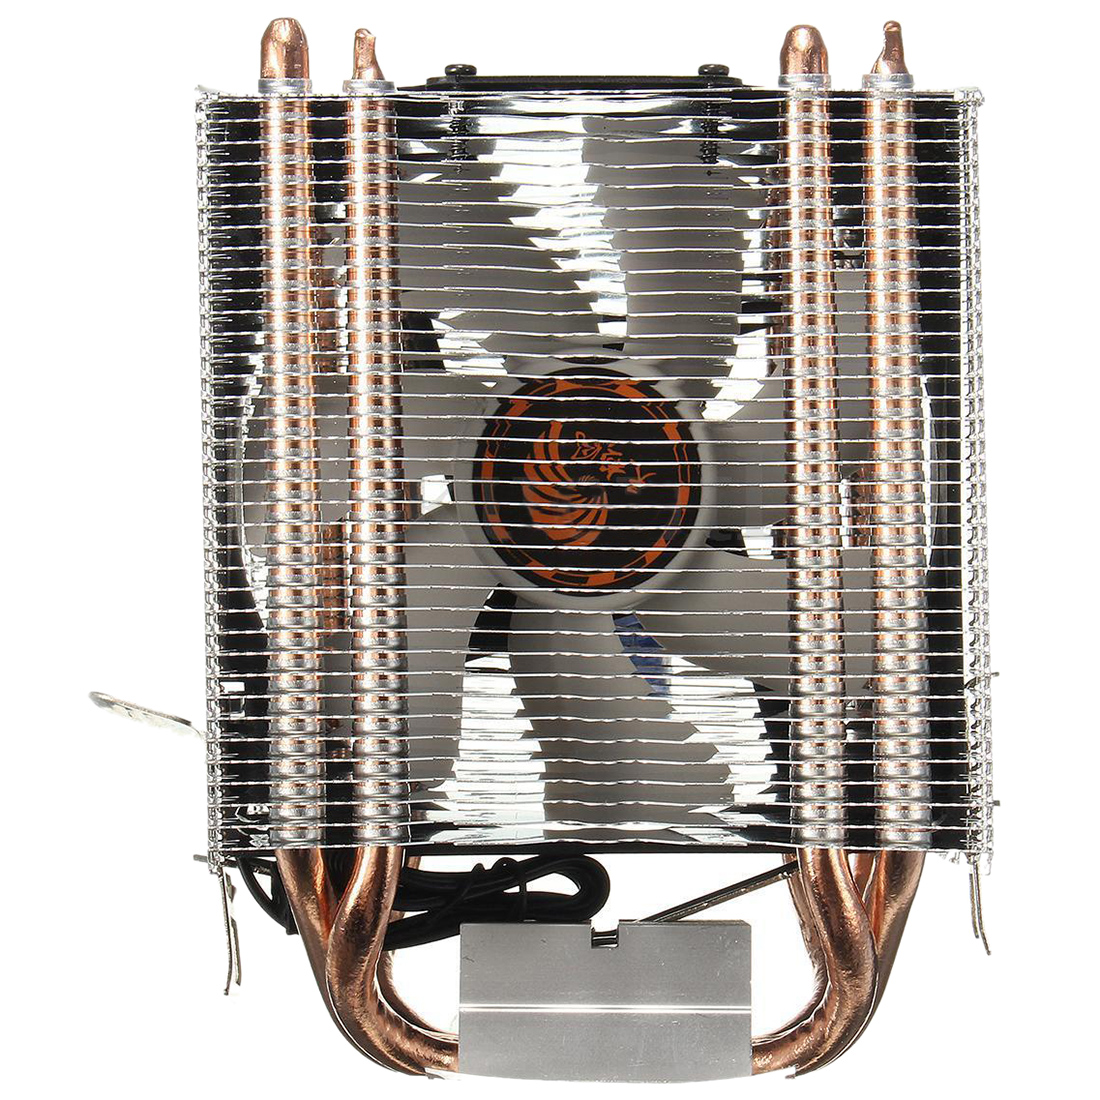 New 4 Heatpipe CPU Cooler Heat Sink for Intel LGA 1150 1151 1155 775 1156 (FOR AMD)